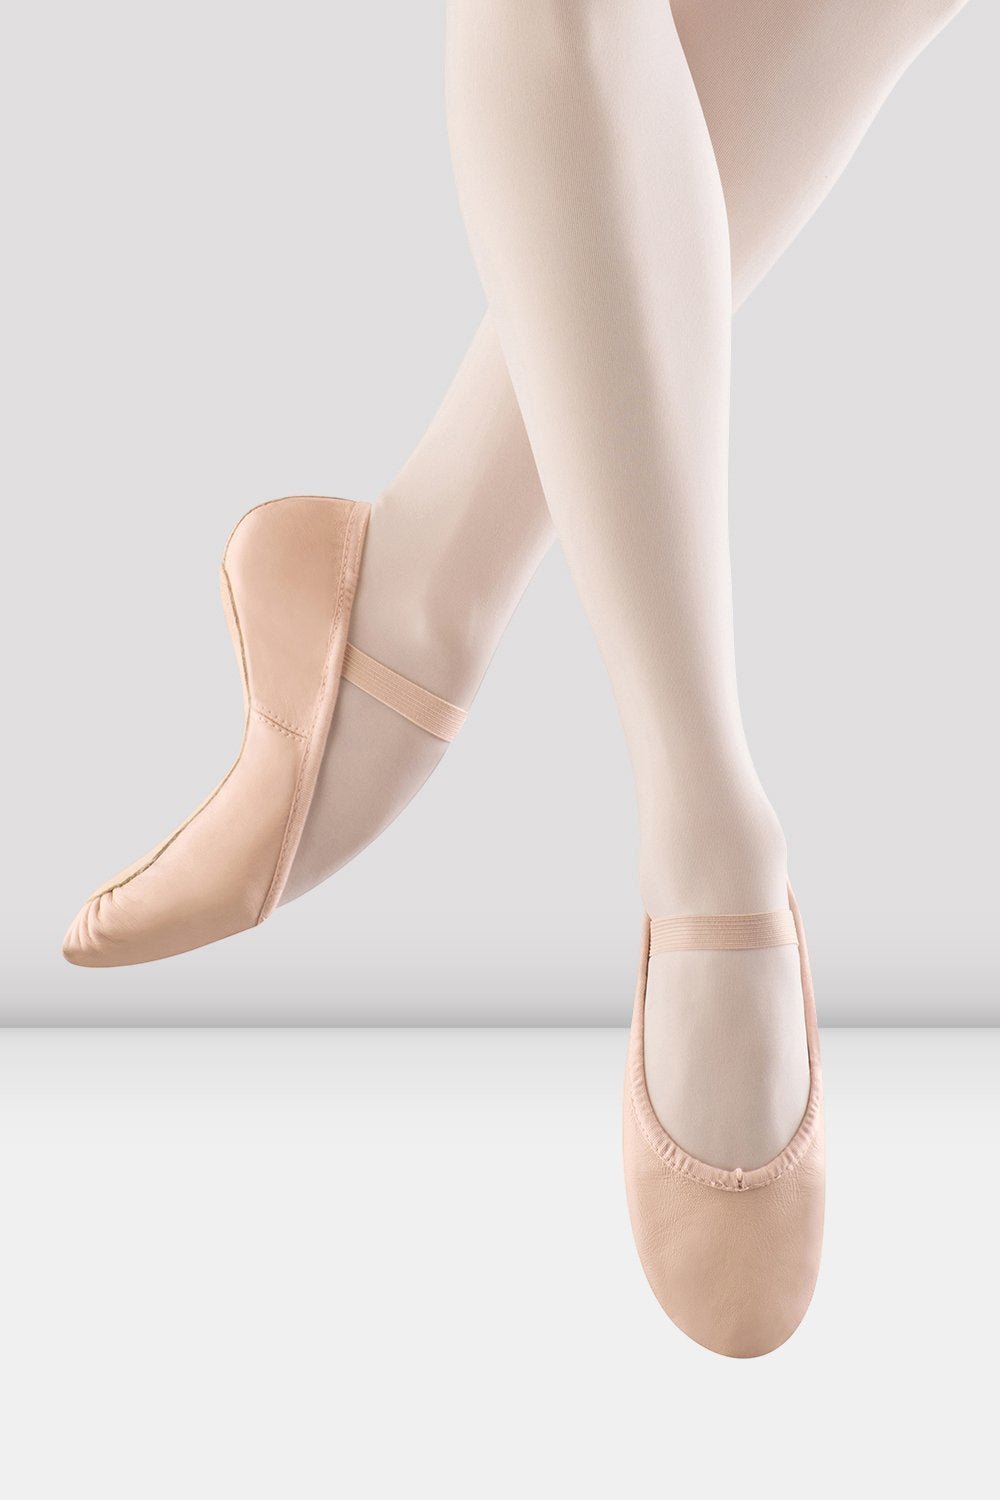 Bloch Dansoft Full Sole Leather Ballet Shoes (Adult) SO205L